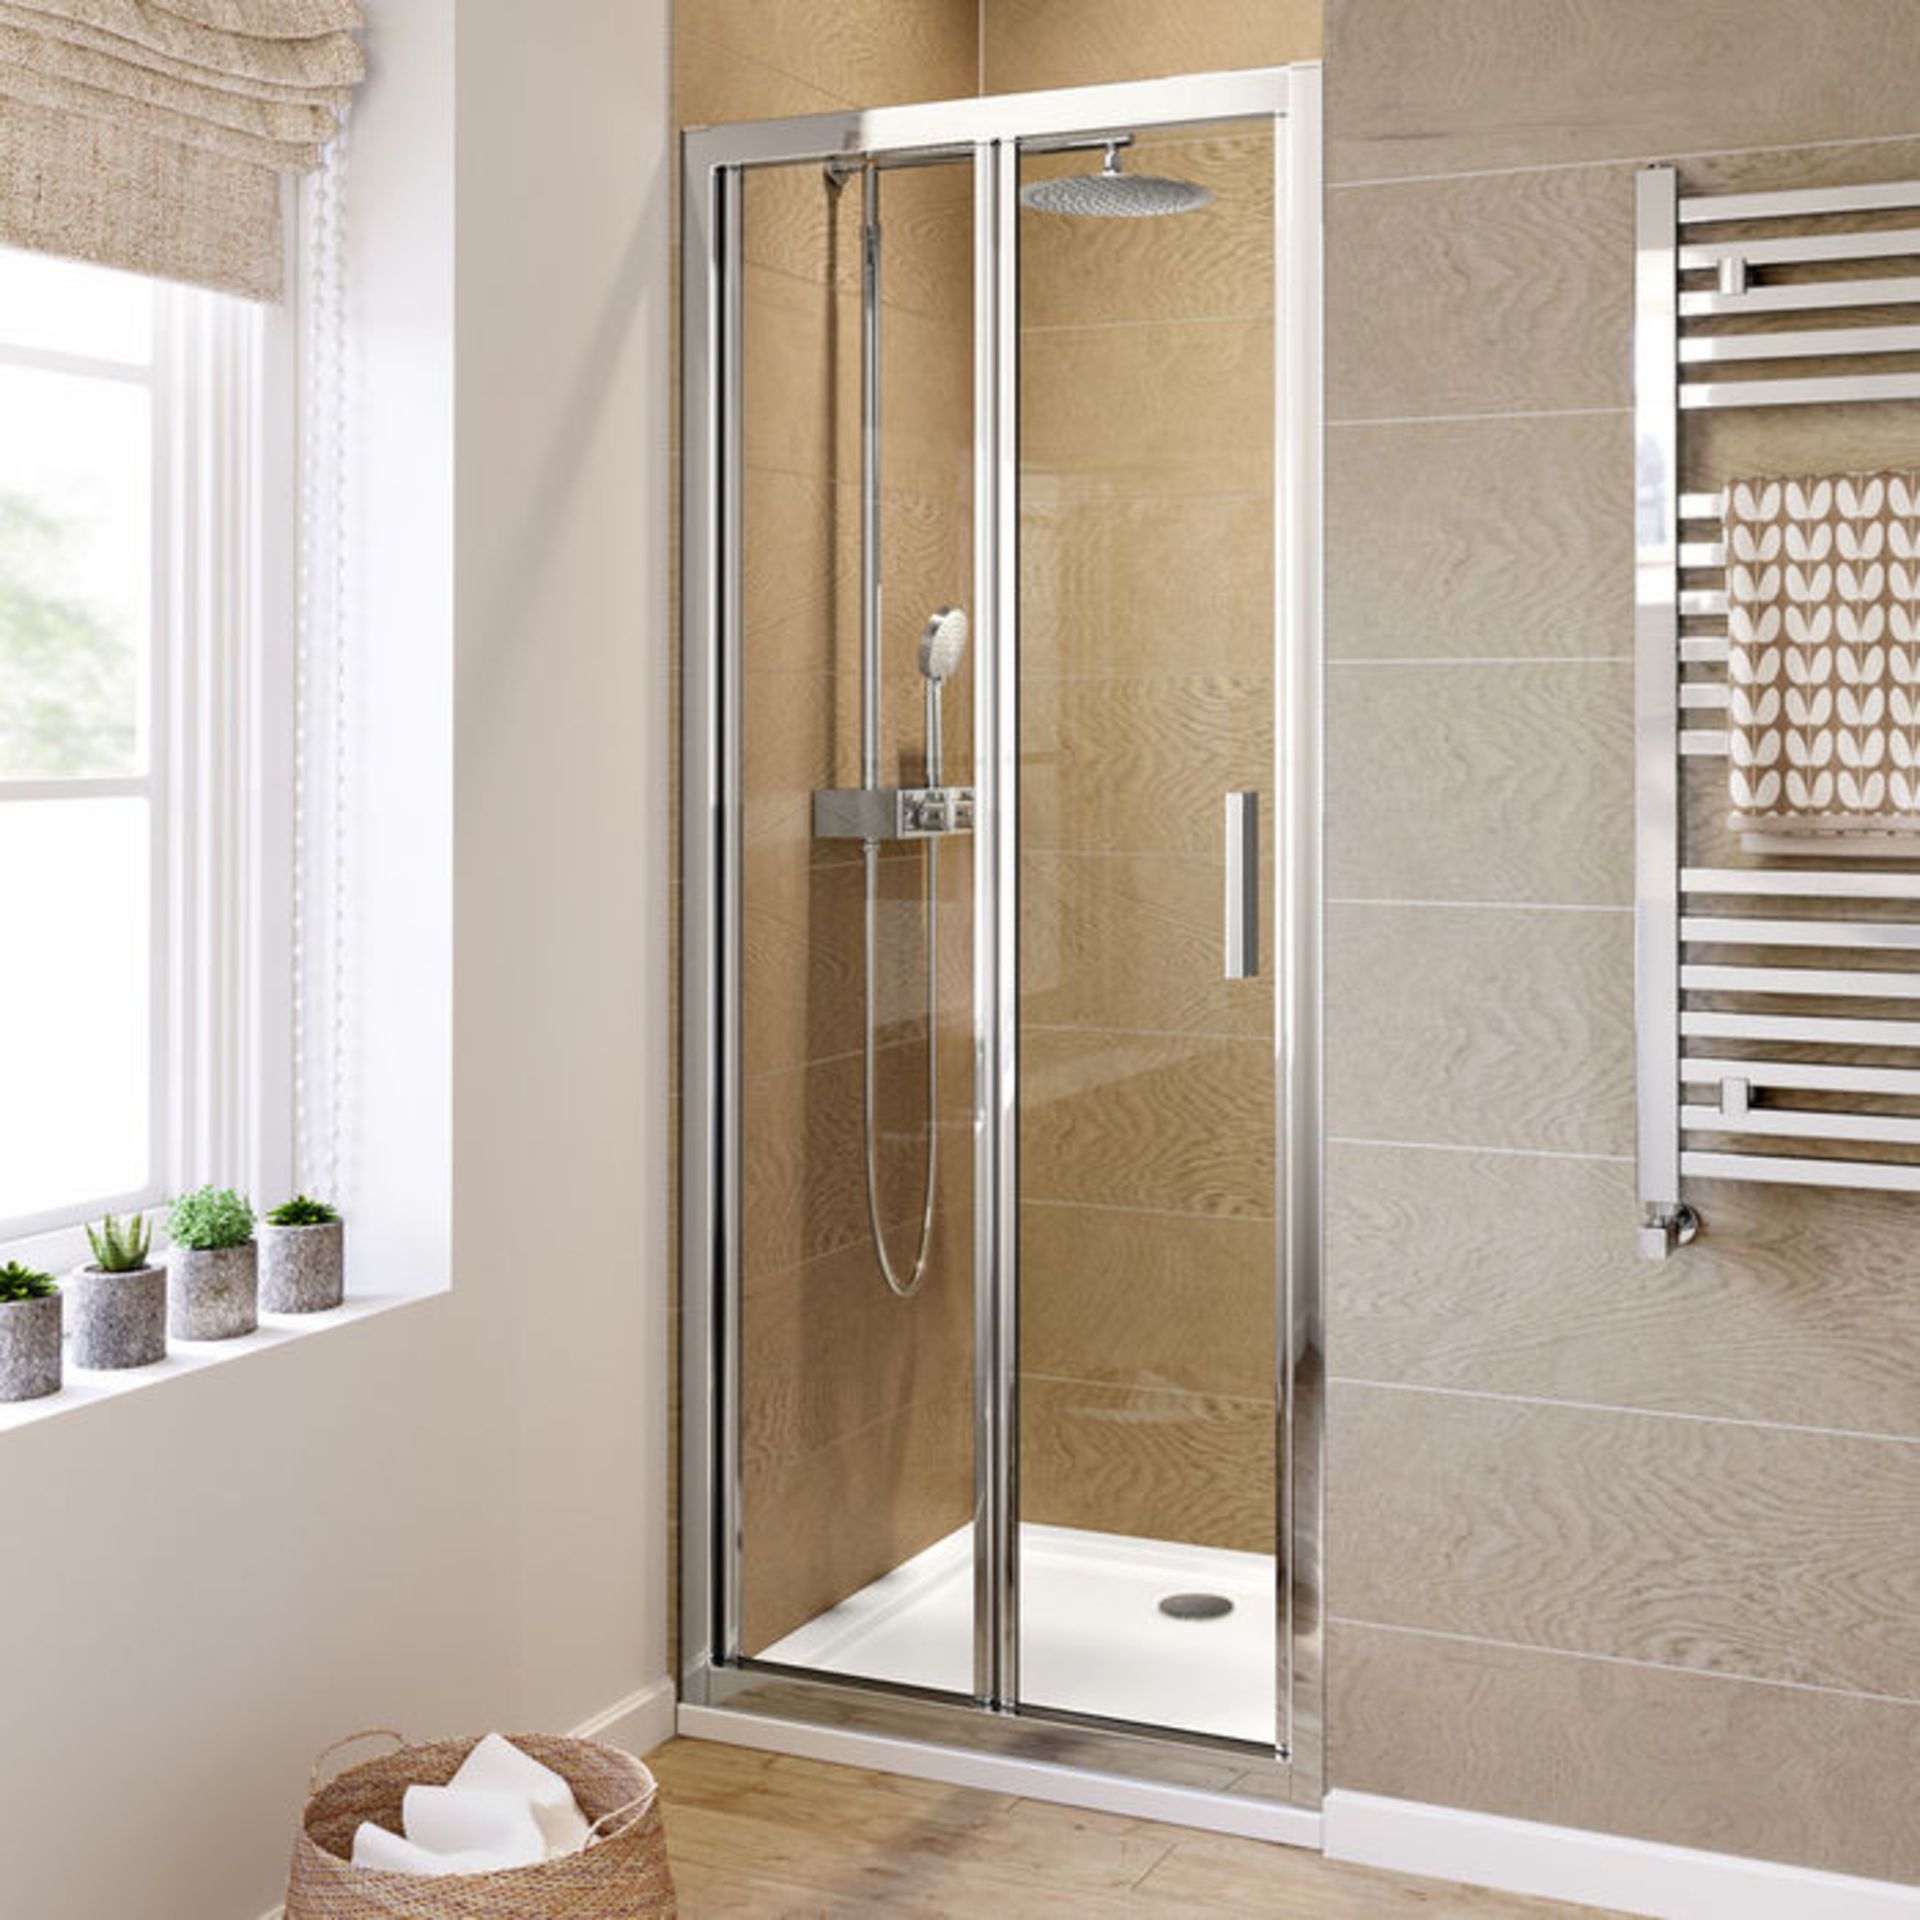 (UK23) 760mm - 6mm Elements EasyClean Bi Fold Shower Door. RRP £299.99. 6mm Safety Glass - Single- - Image 2 of 4